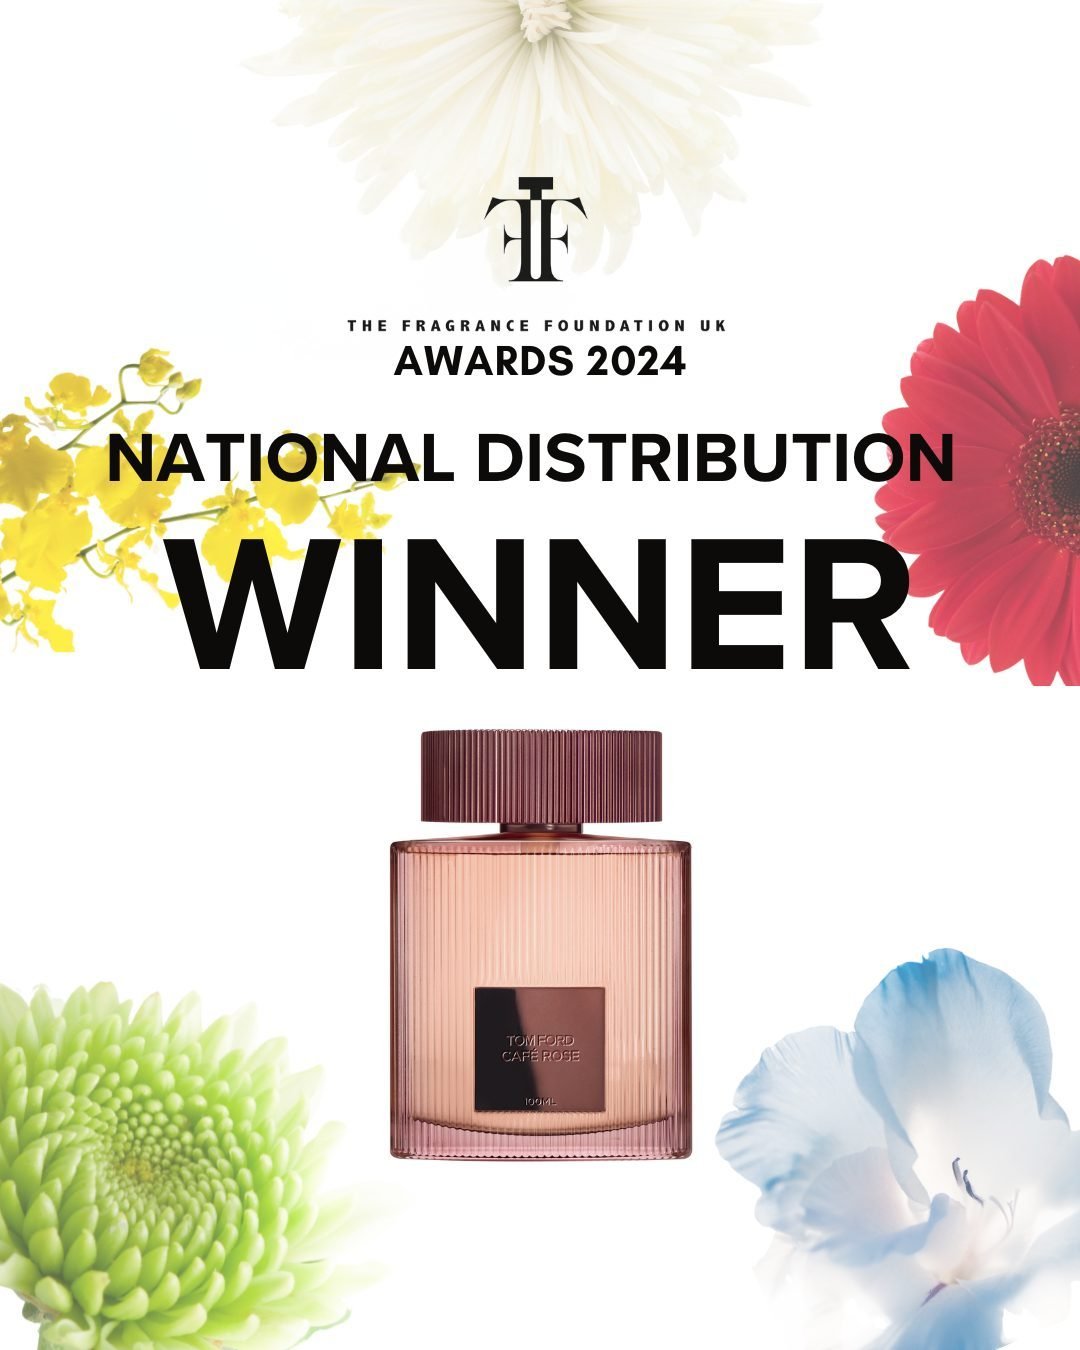 Winner of The Fragrance Foundation UK Best New Fragrance in National Distribution Award... 
@TomFordBeauty &ndash; Caf&eacute; Rose! Congratulations!

#TFFAwards2024 #Winner #FragranceAwards #Fragrance #FragranceLover #FragranceCelebration